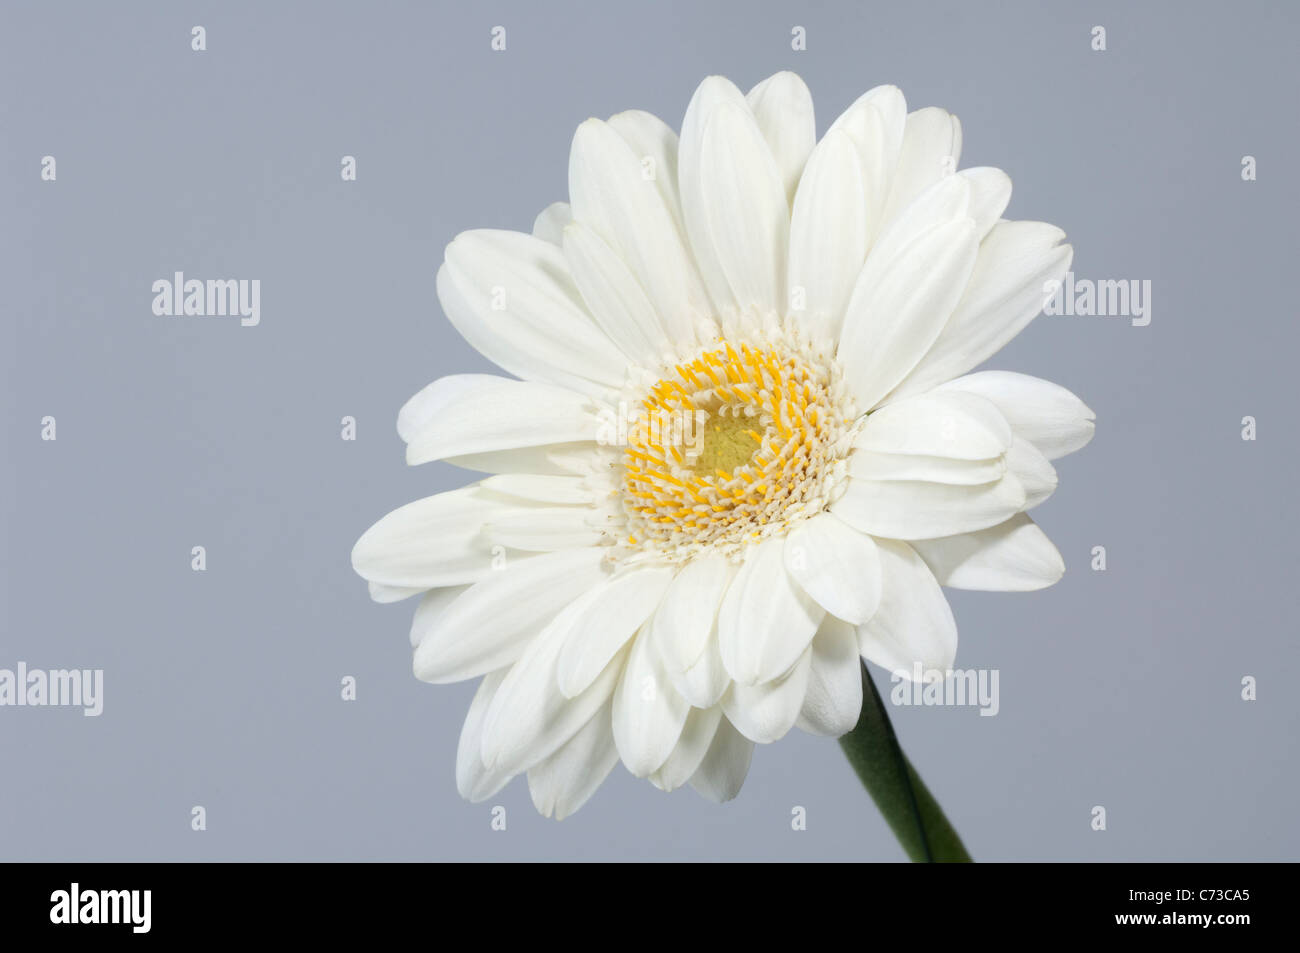 Barberton Daisy, Gerbera, Transvaal Daisy (Gerbera hybrid), white flower. Studio picture against a gray background. Stock Photo